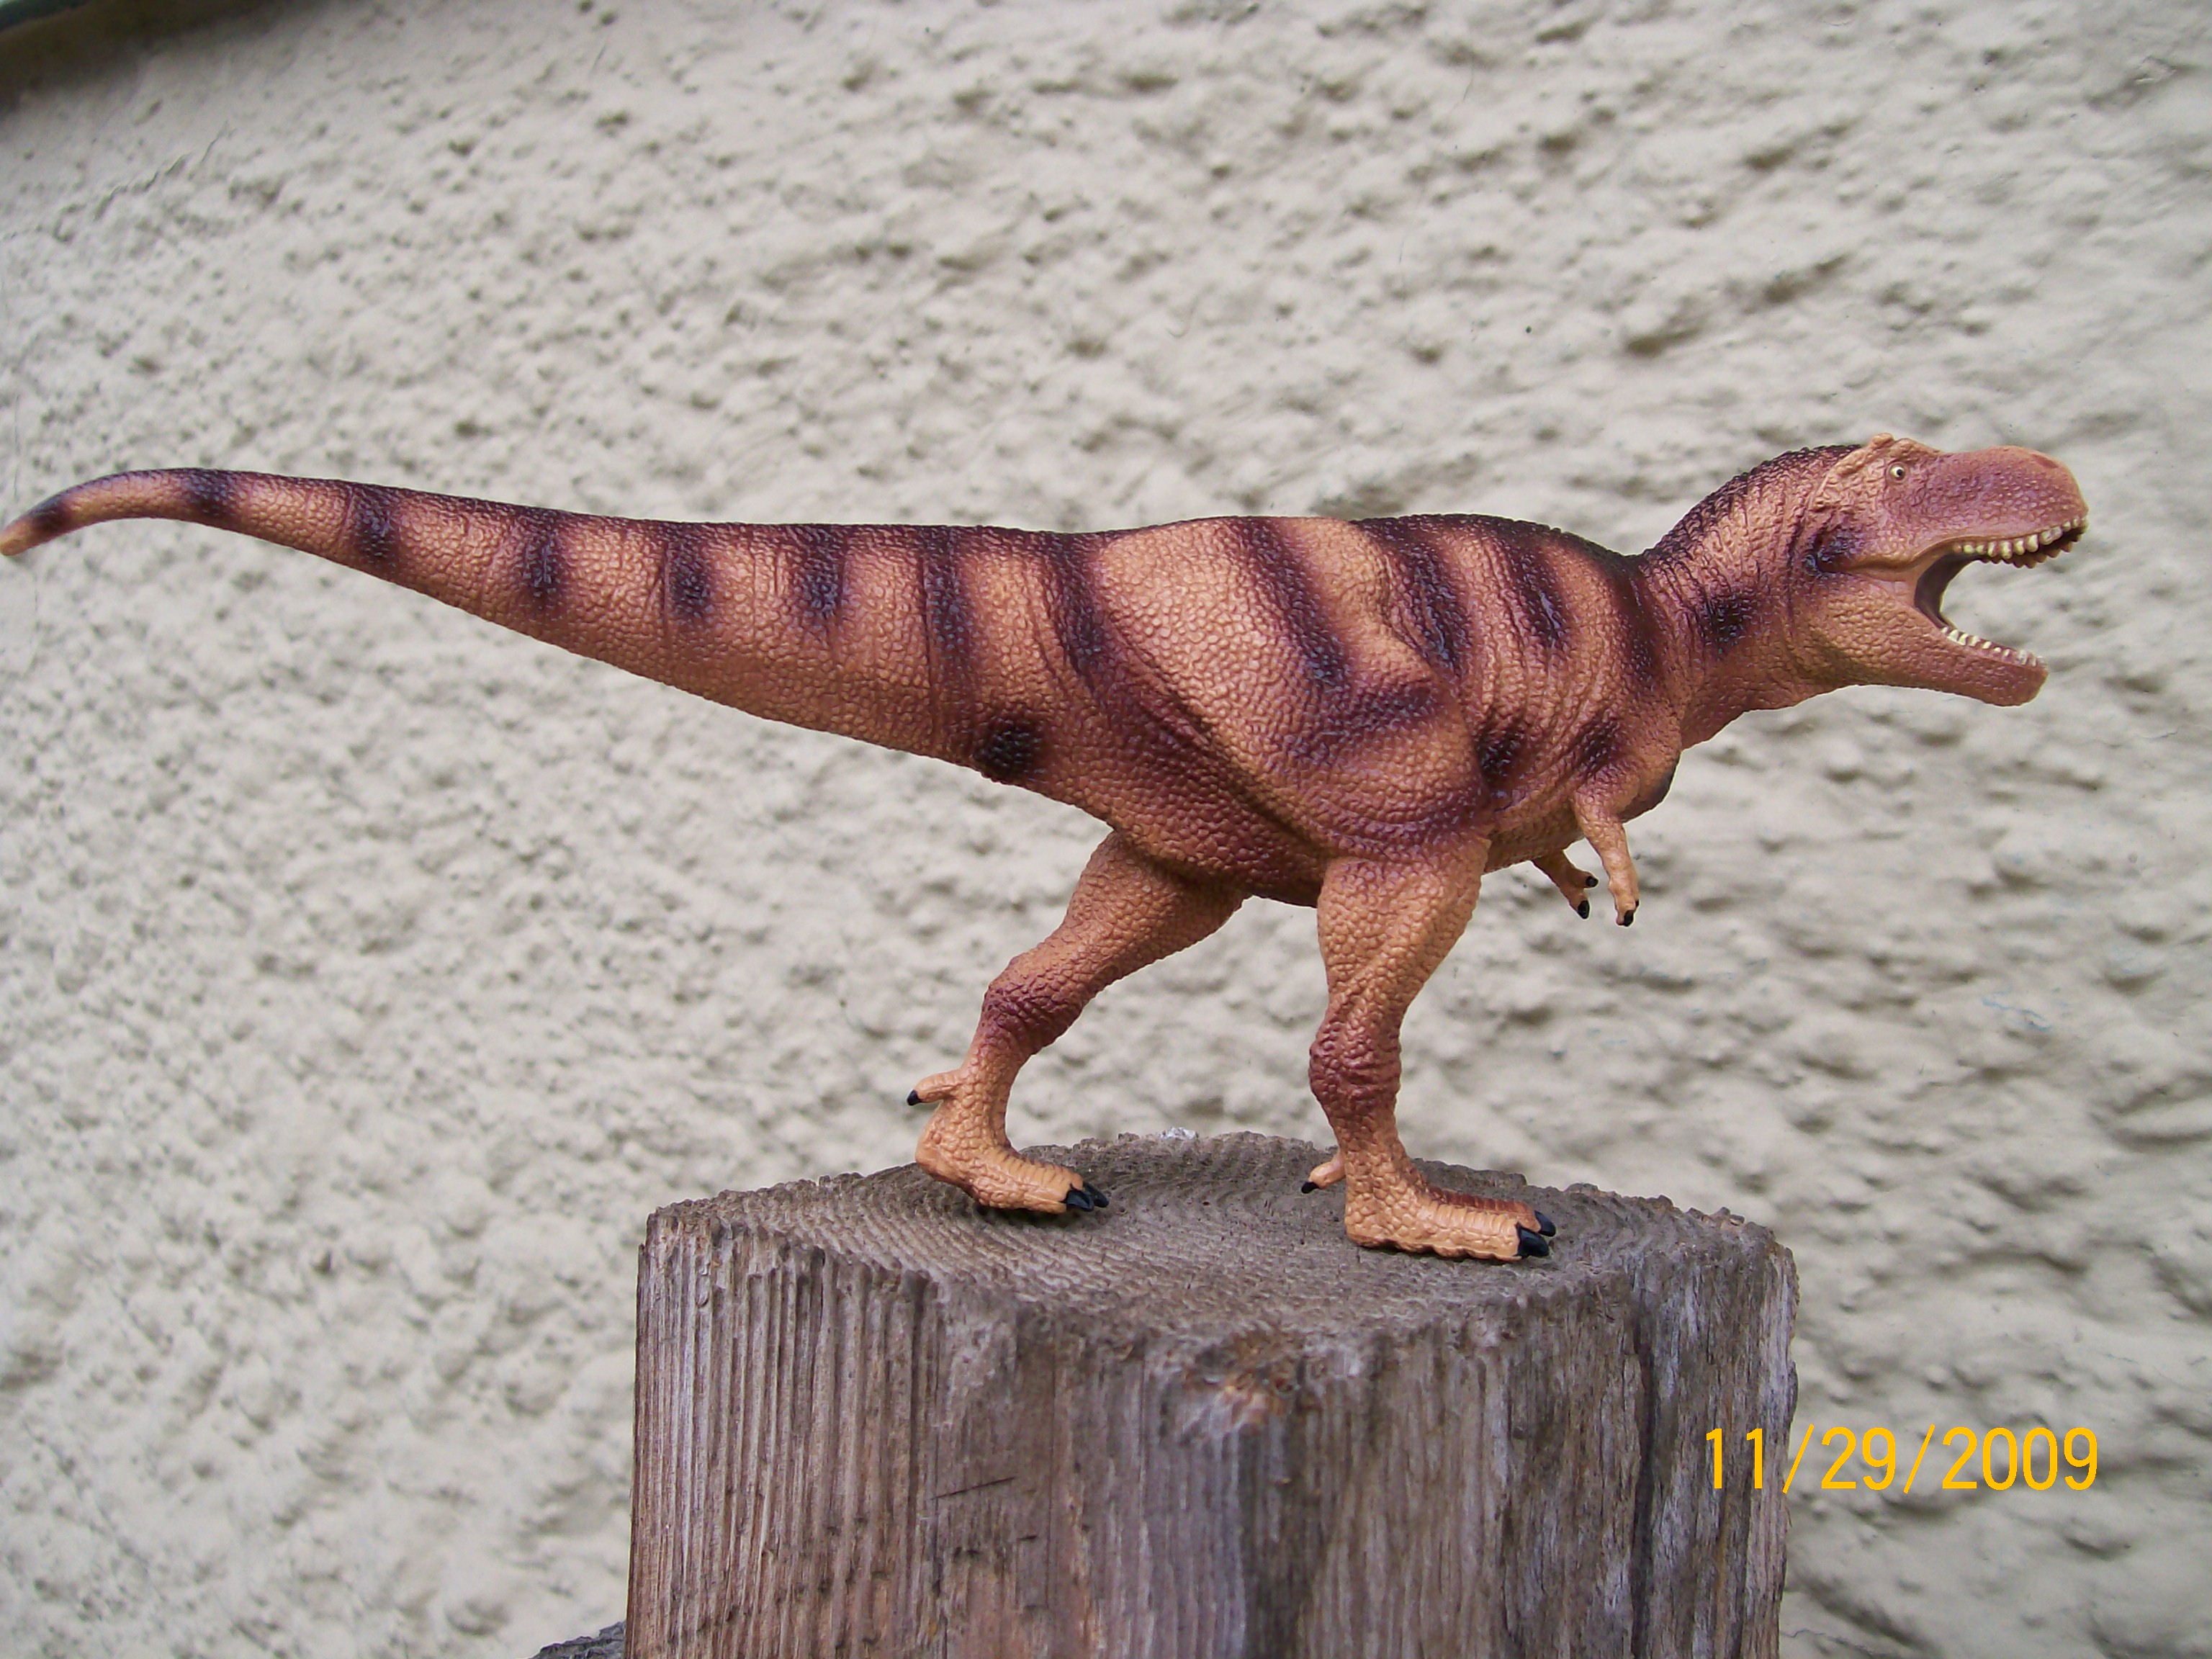 Tyrannosaurus rex (kinto favorite collection)